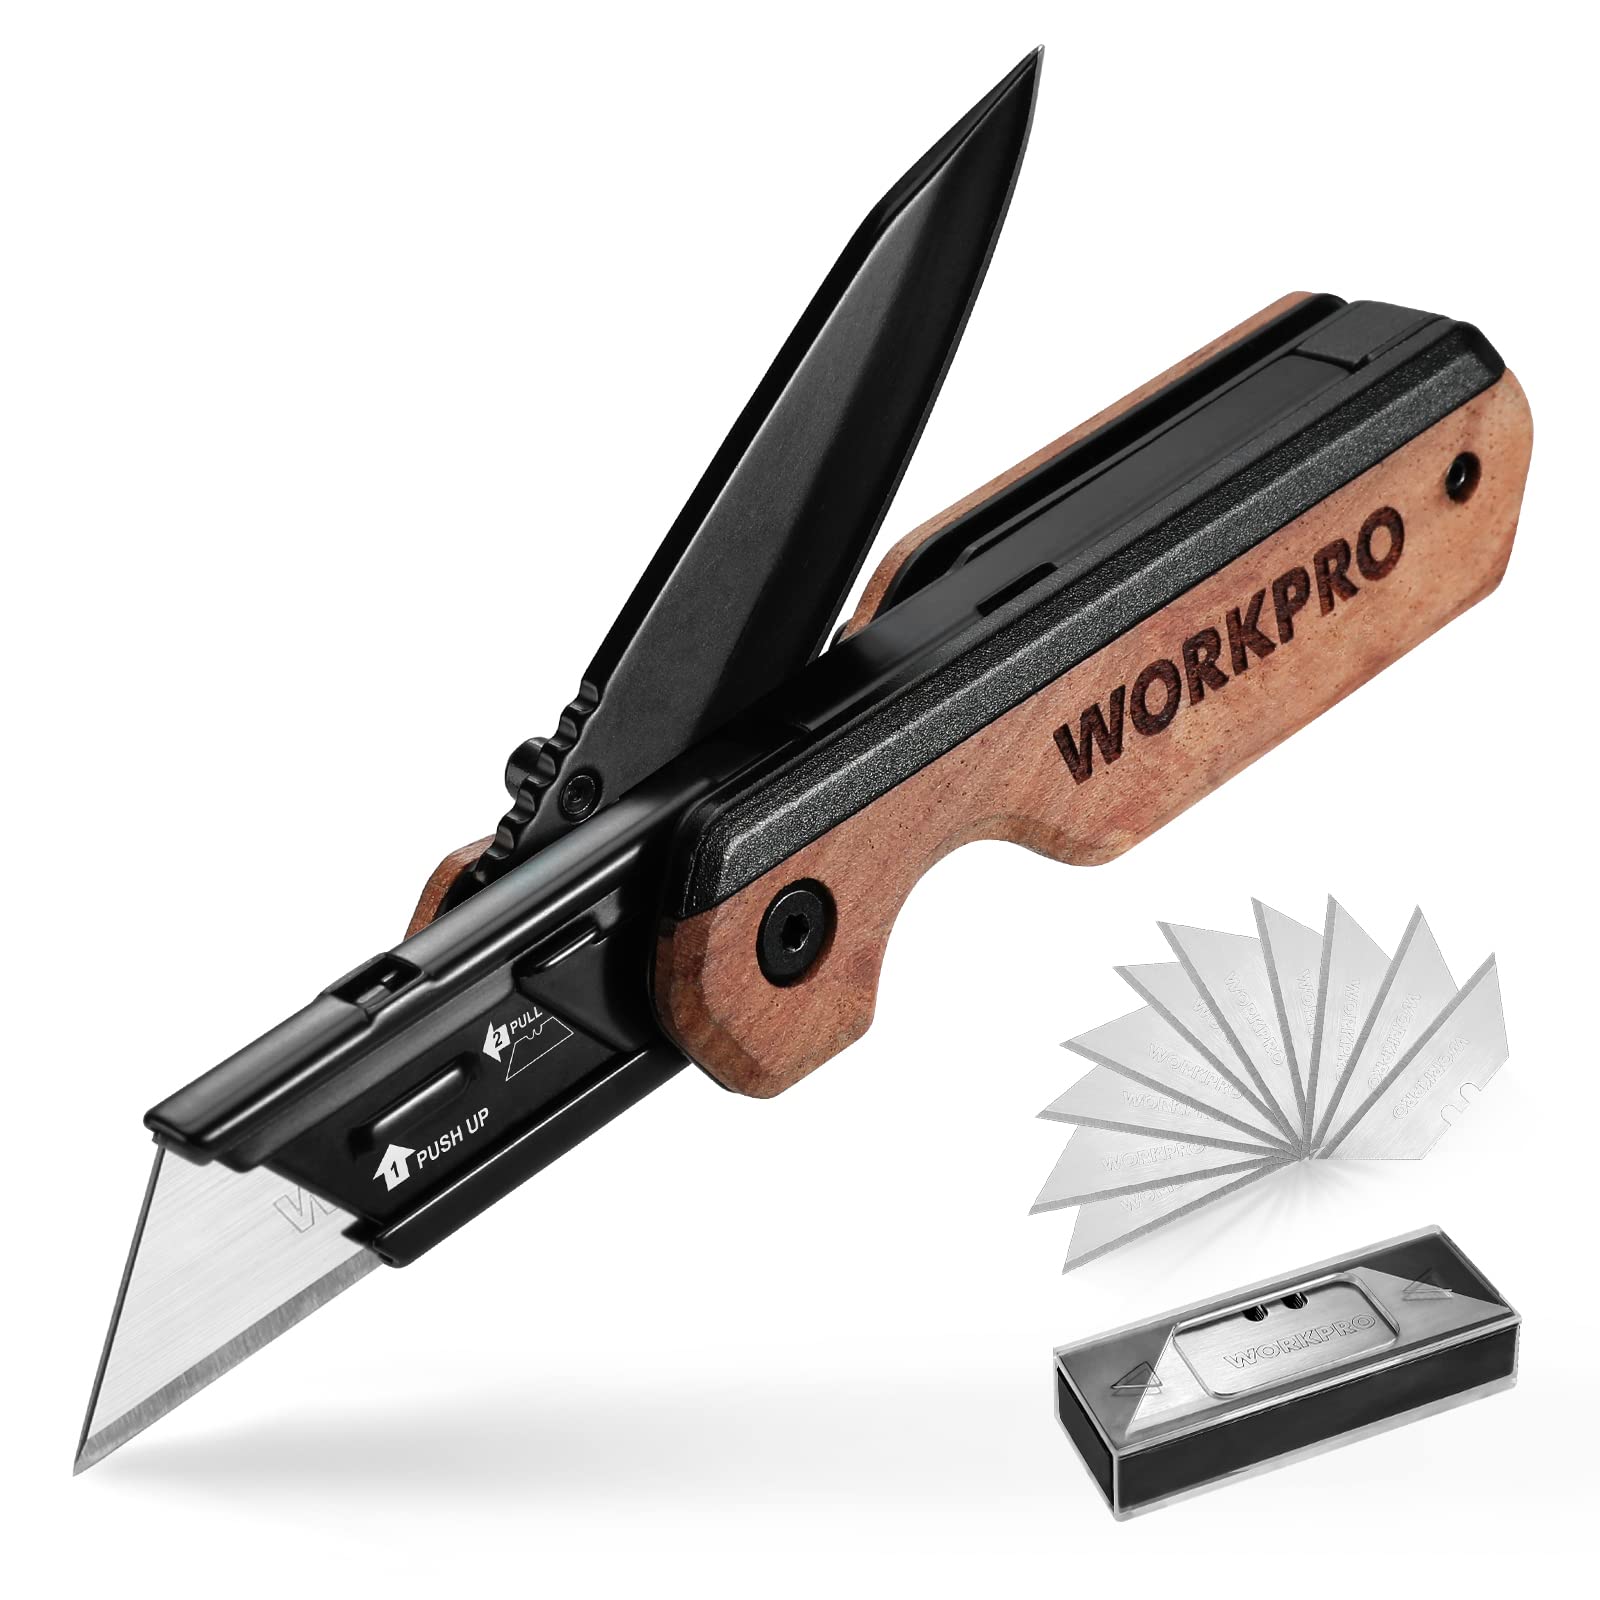 WORKPRO 2-in-1 Folding Knife/Utility Knife & VALUEMAX Utility Knife and Razor Blade Scraper Set